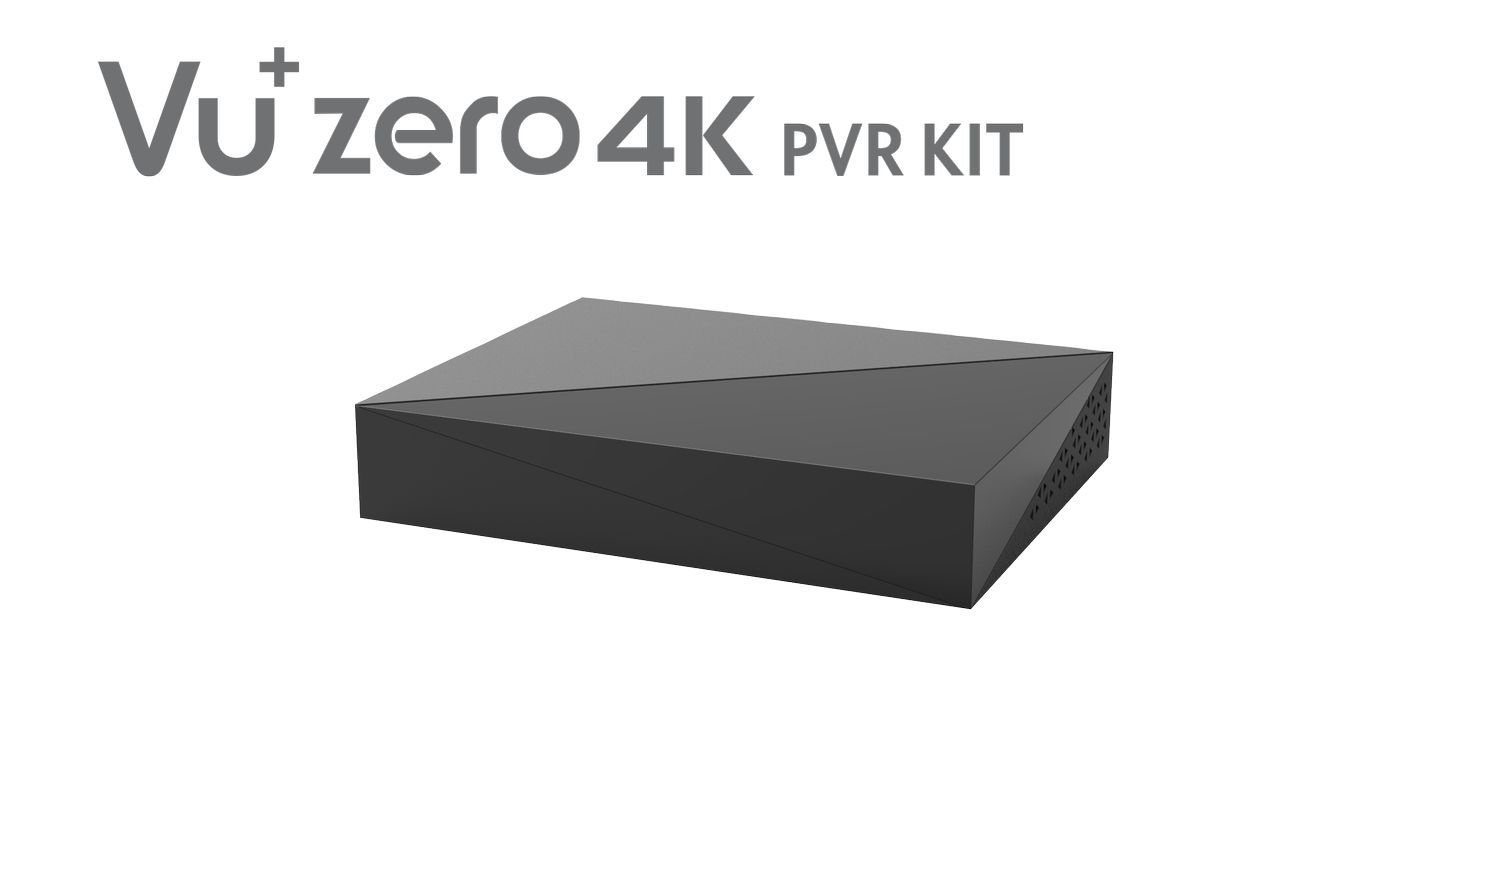 VU+ VU+ Zero 4K PVR Kit Inklusive HDD, 5TB, schwarz Tuner